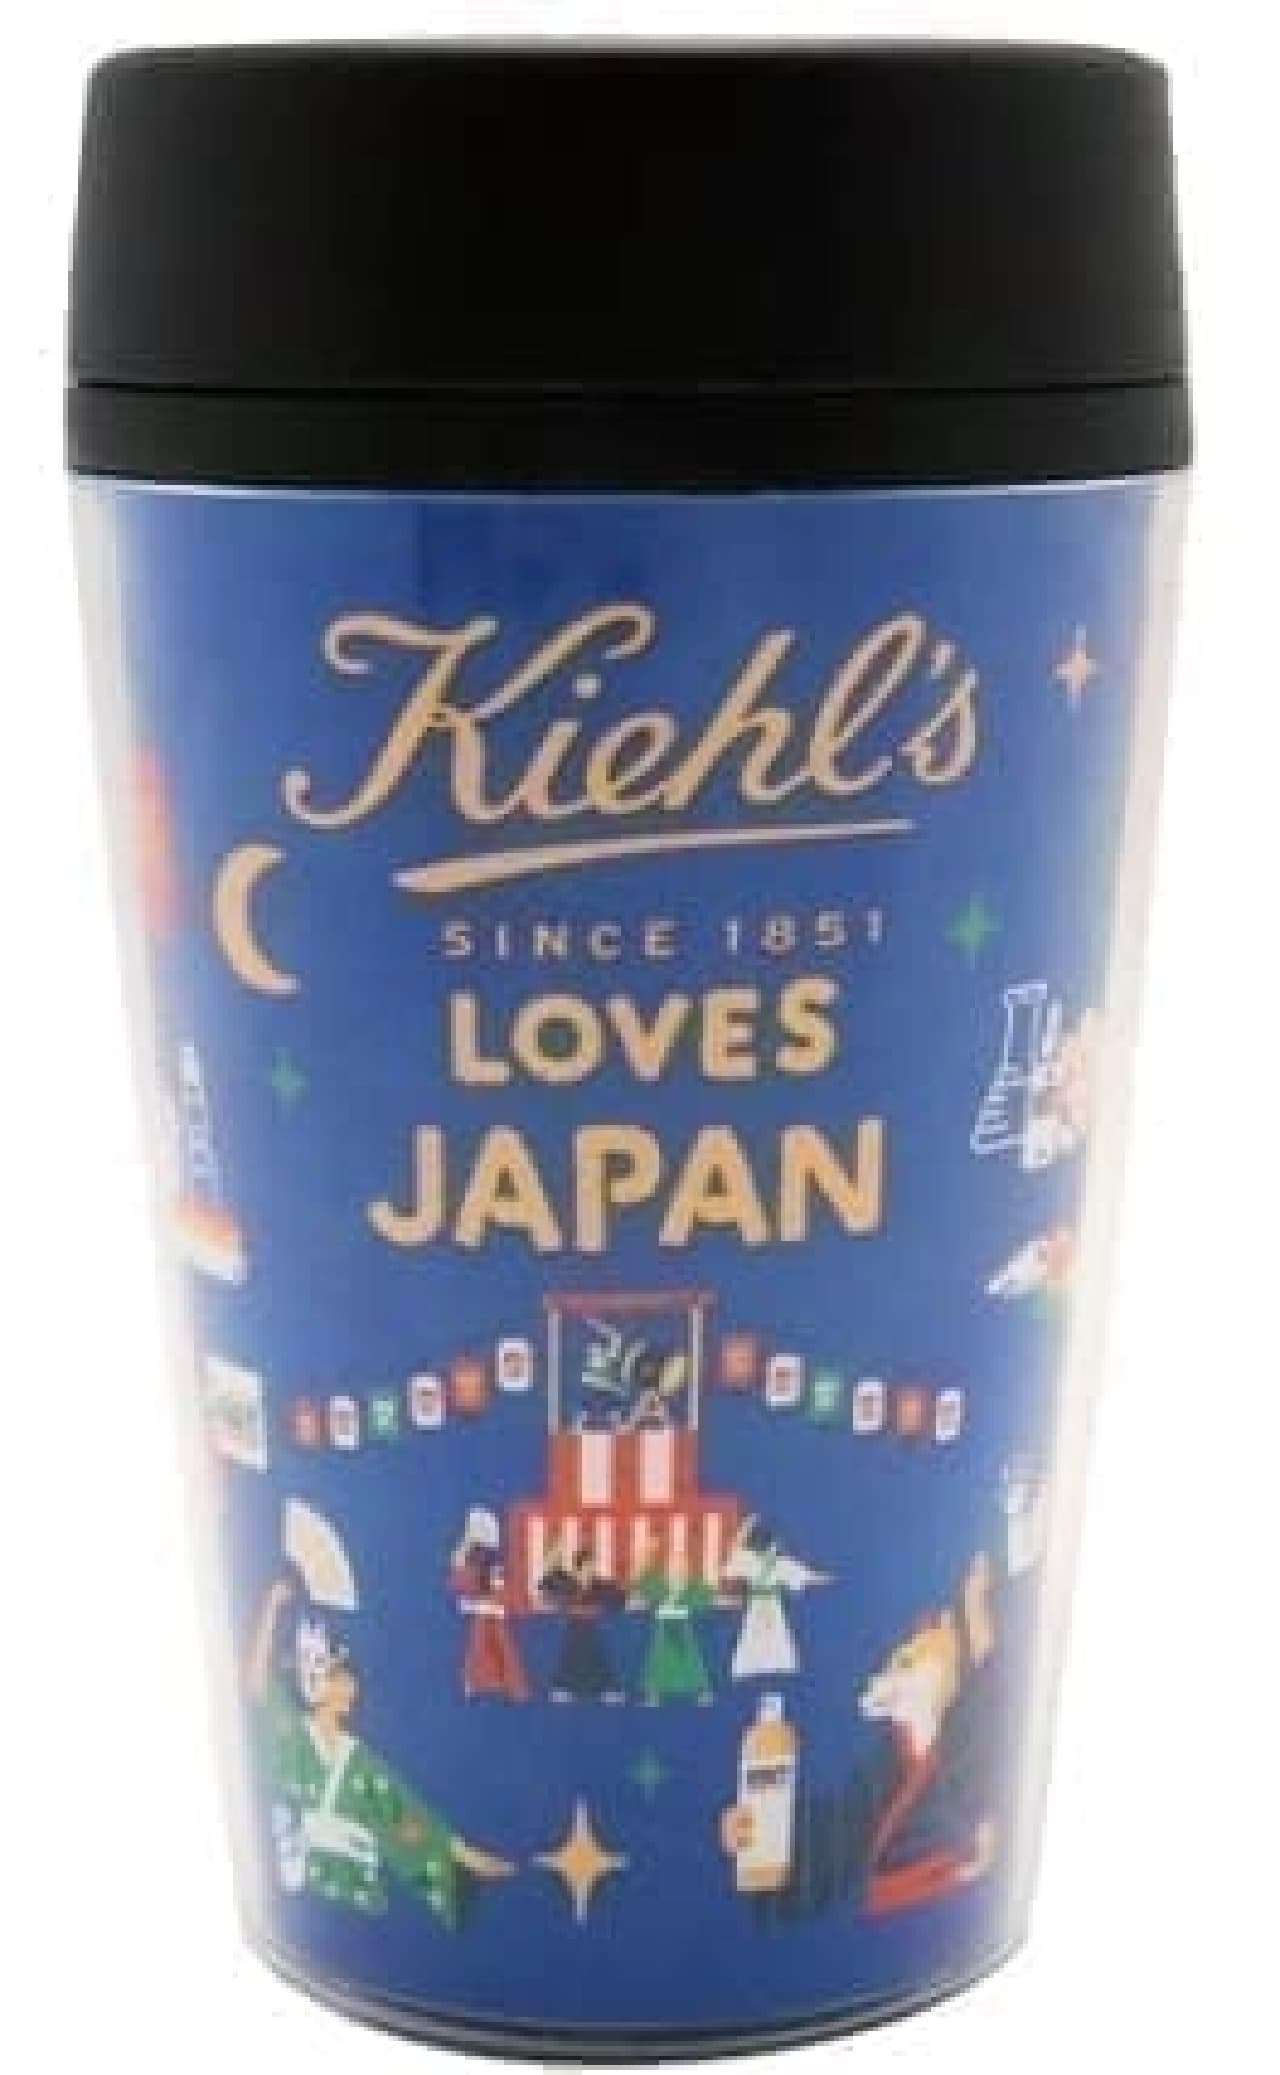 「2020 Kiehl‘s LOVES JAPAN」タンブラー